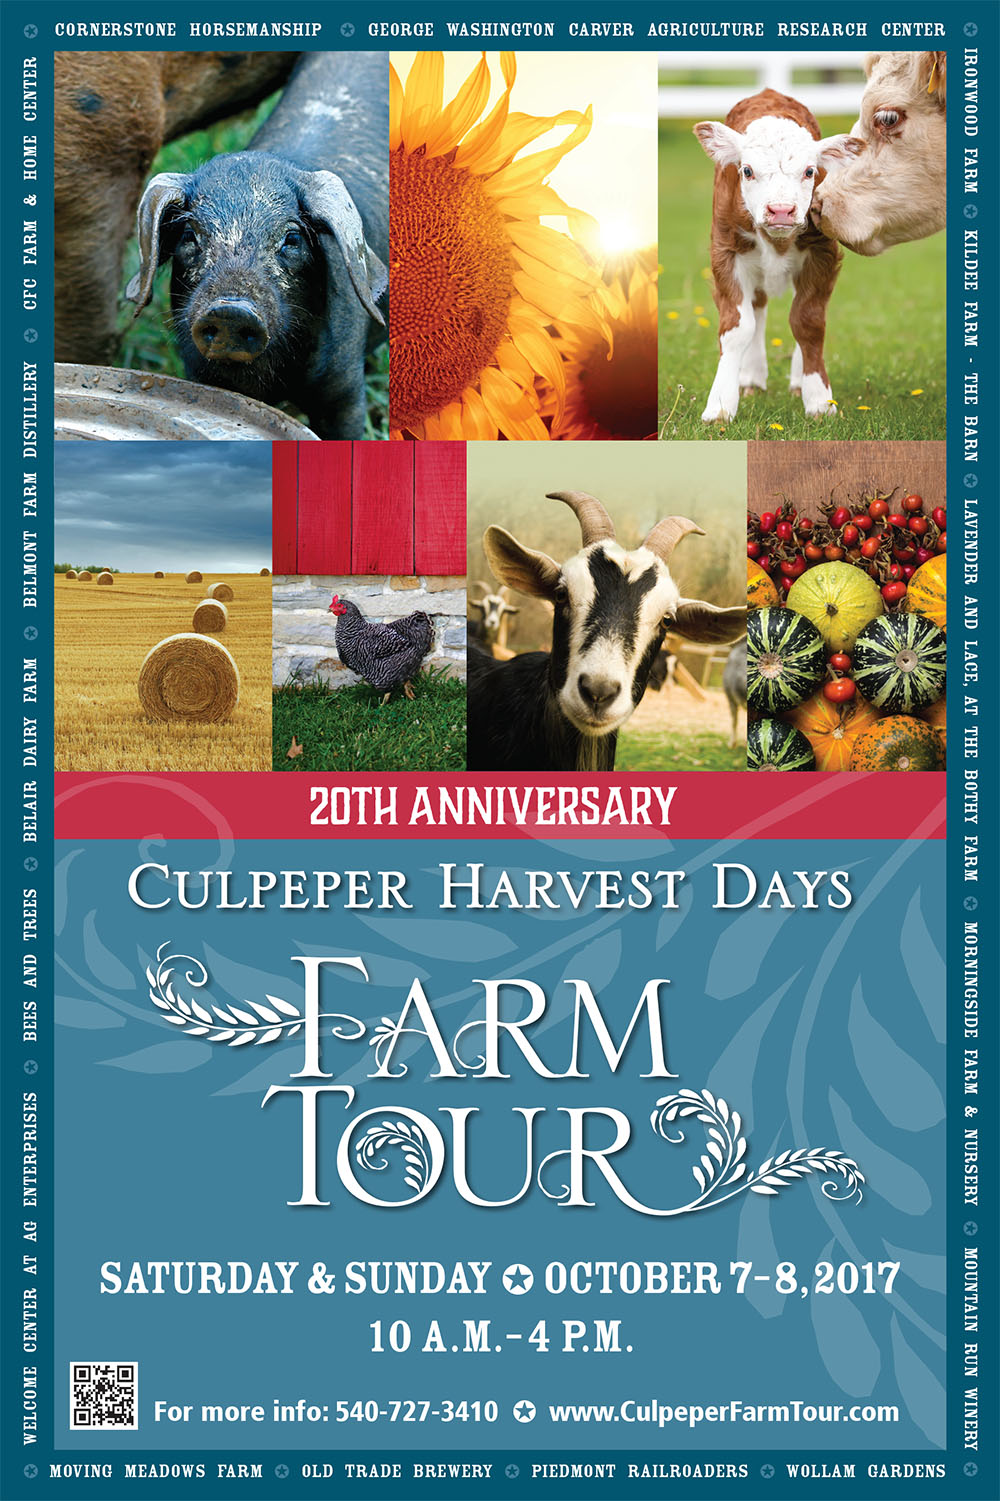 15 Years of K Art & Design in Culpeper Culpeper Harvest Days Farm Tour